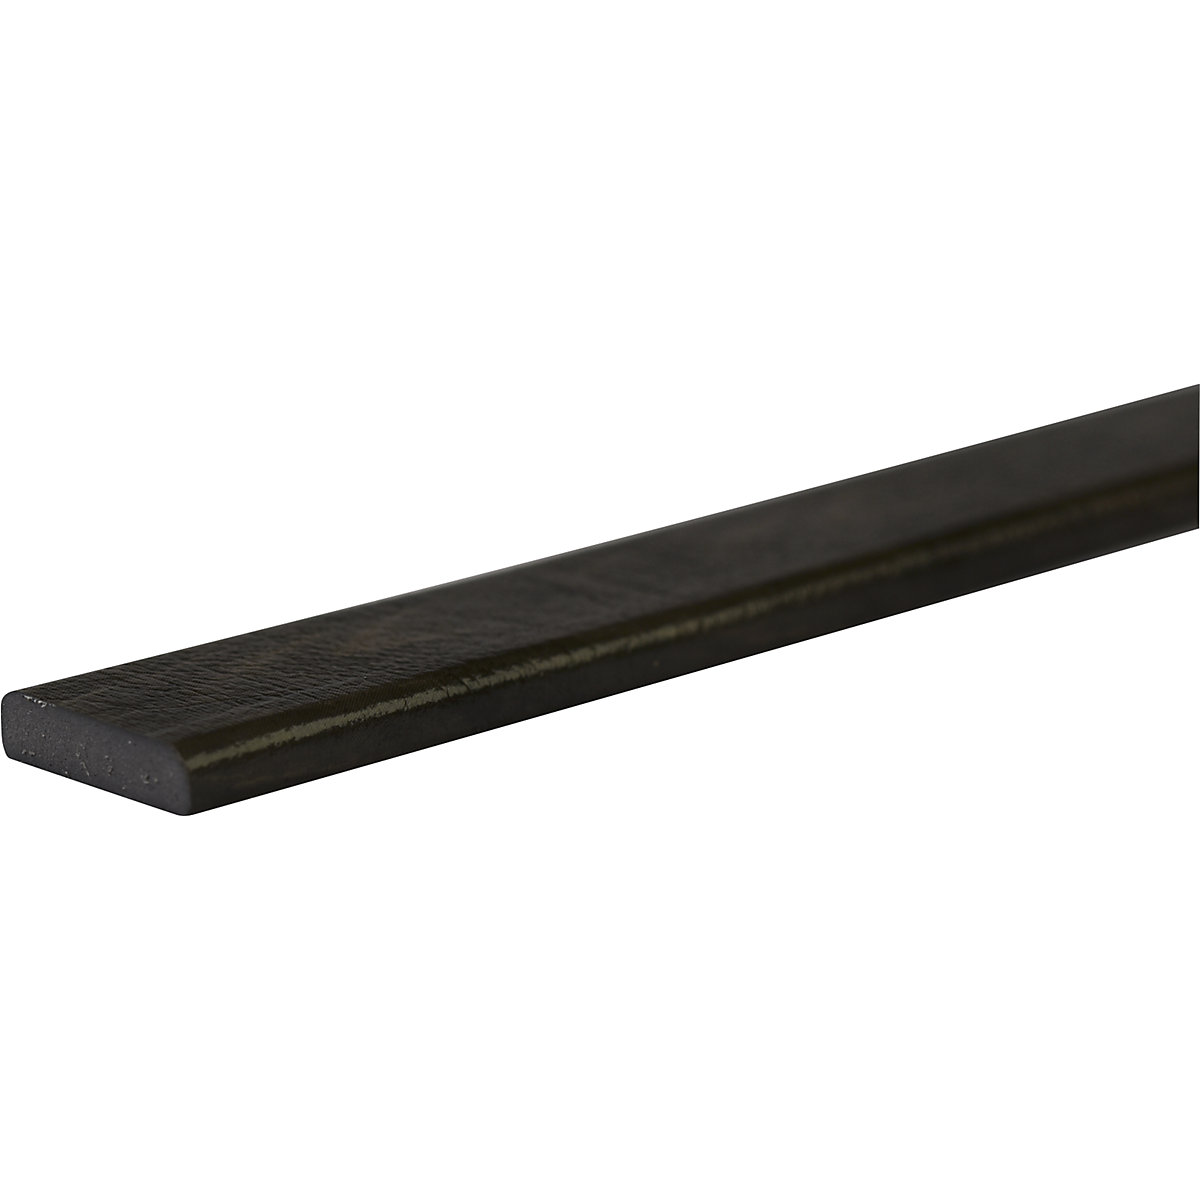 Knuffi®-oppervlaktebescherming – SHG, type F, stuk van 1 m, gecoat hout donker-19